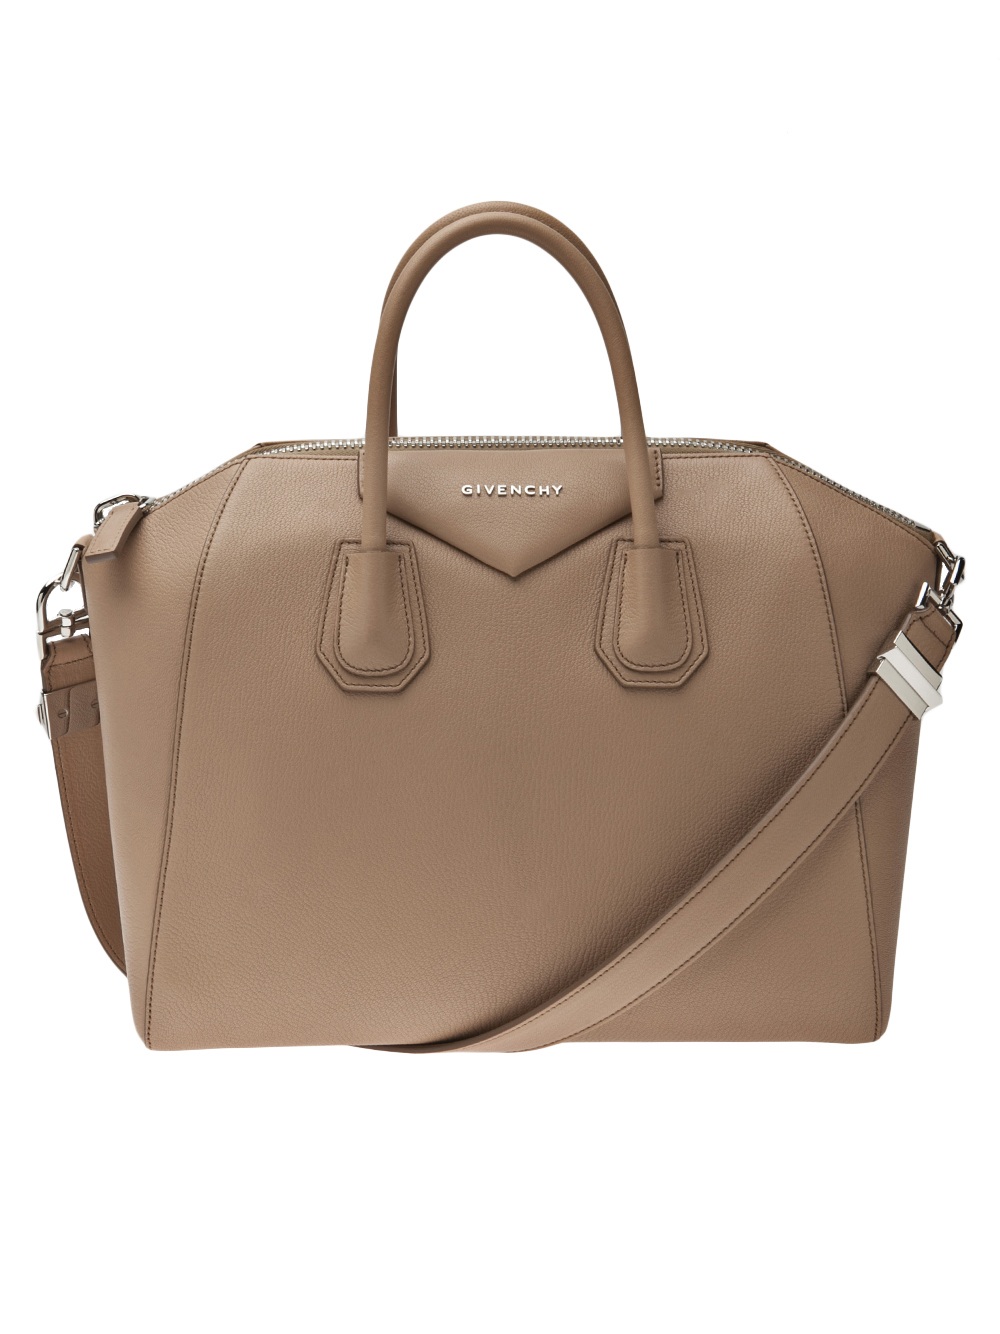 Givenchy Antigona Bag in Brown (silver) | Lyst